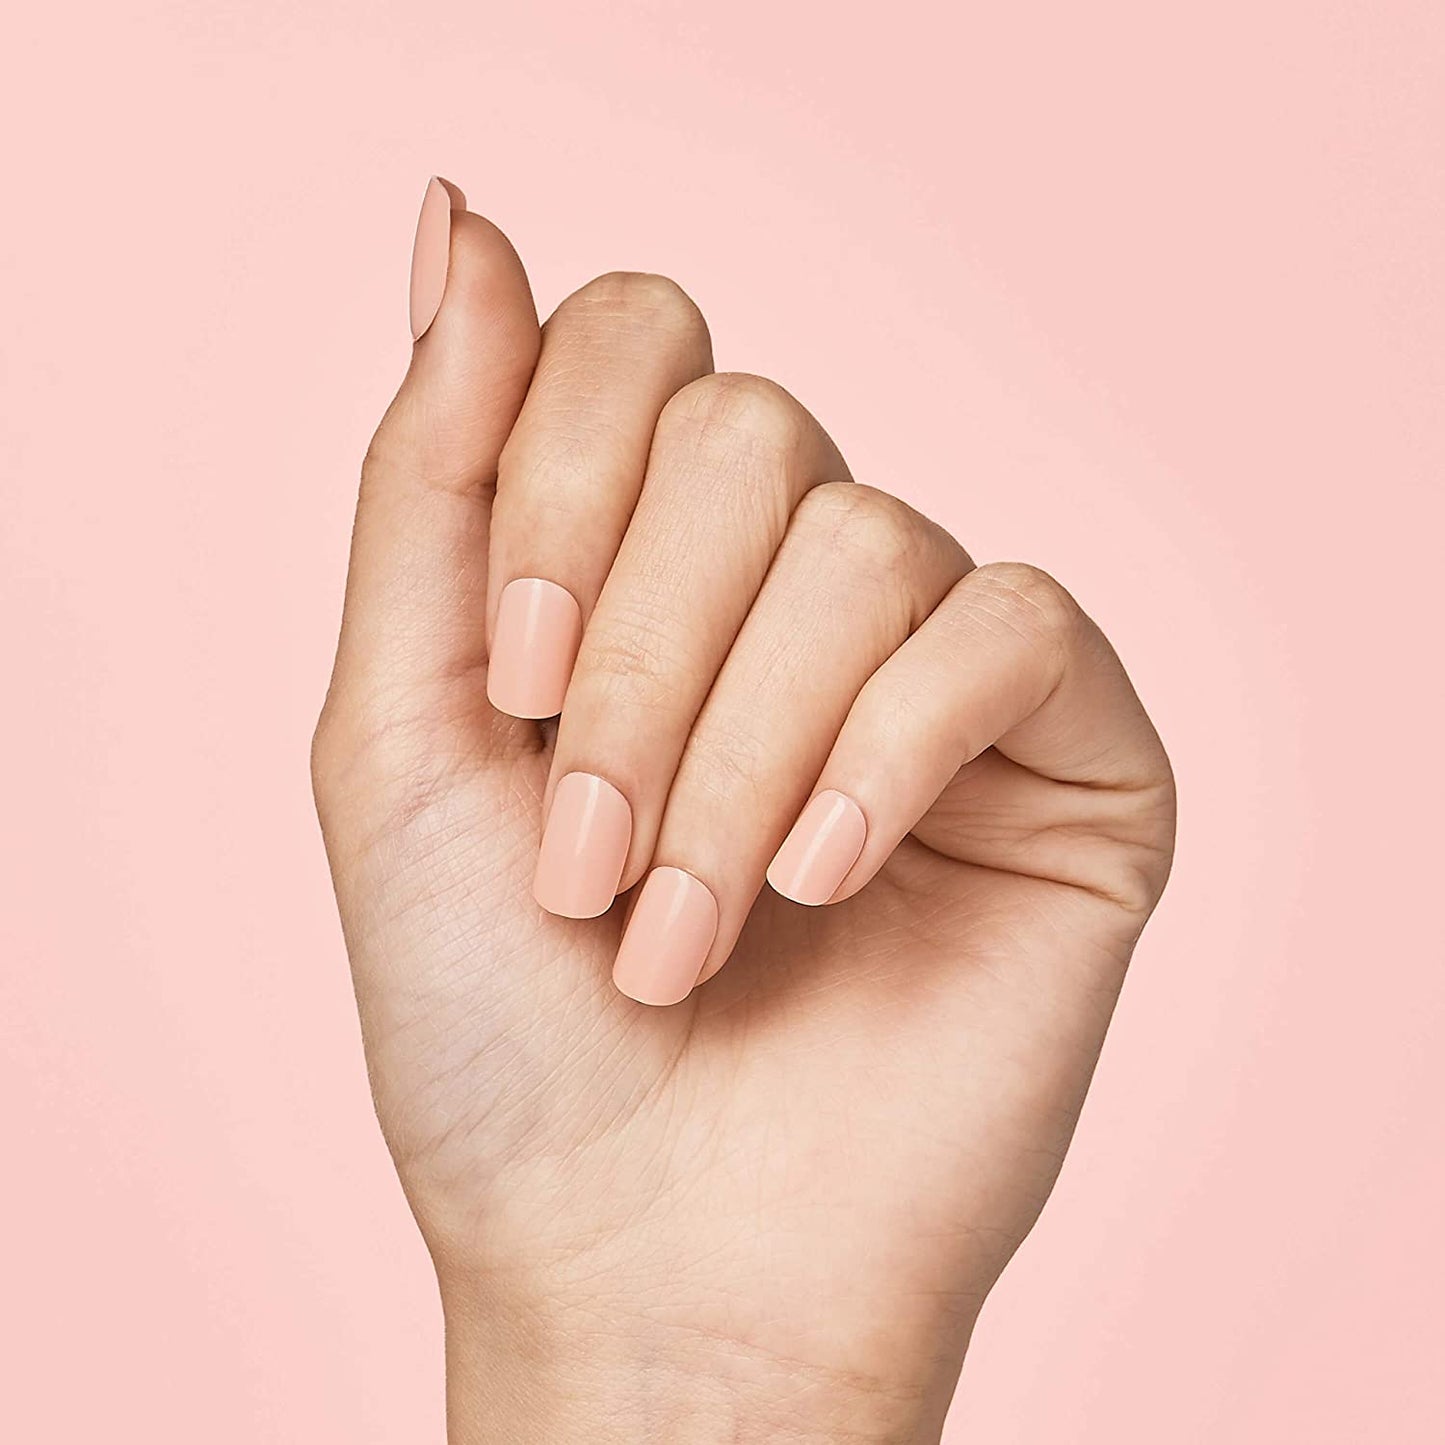 Kiss imPRESS Color Press-On Manicure | Peevish Pink